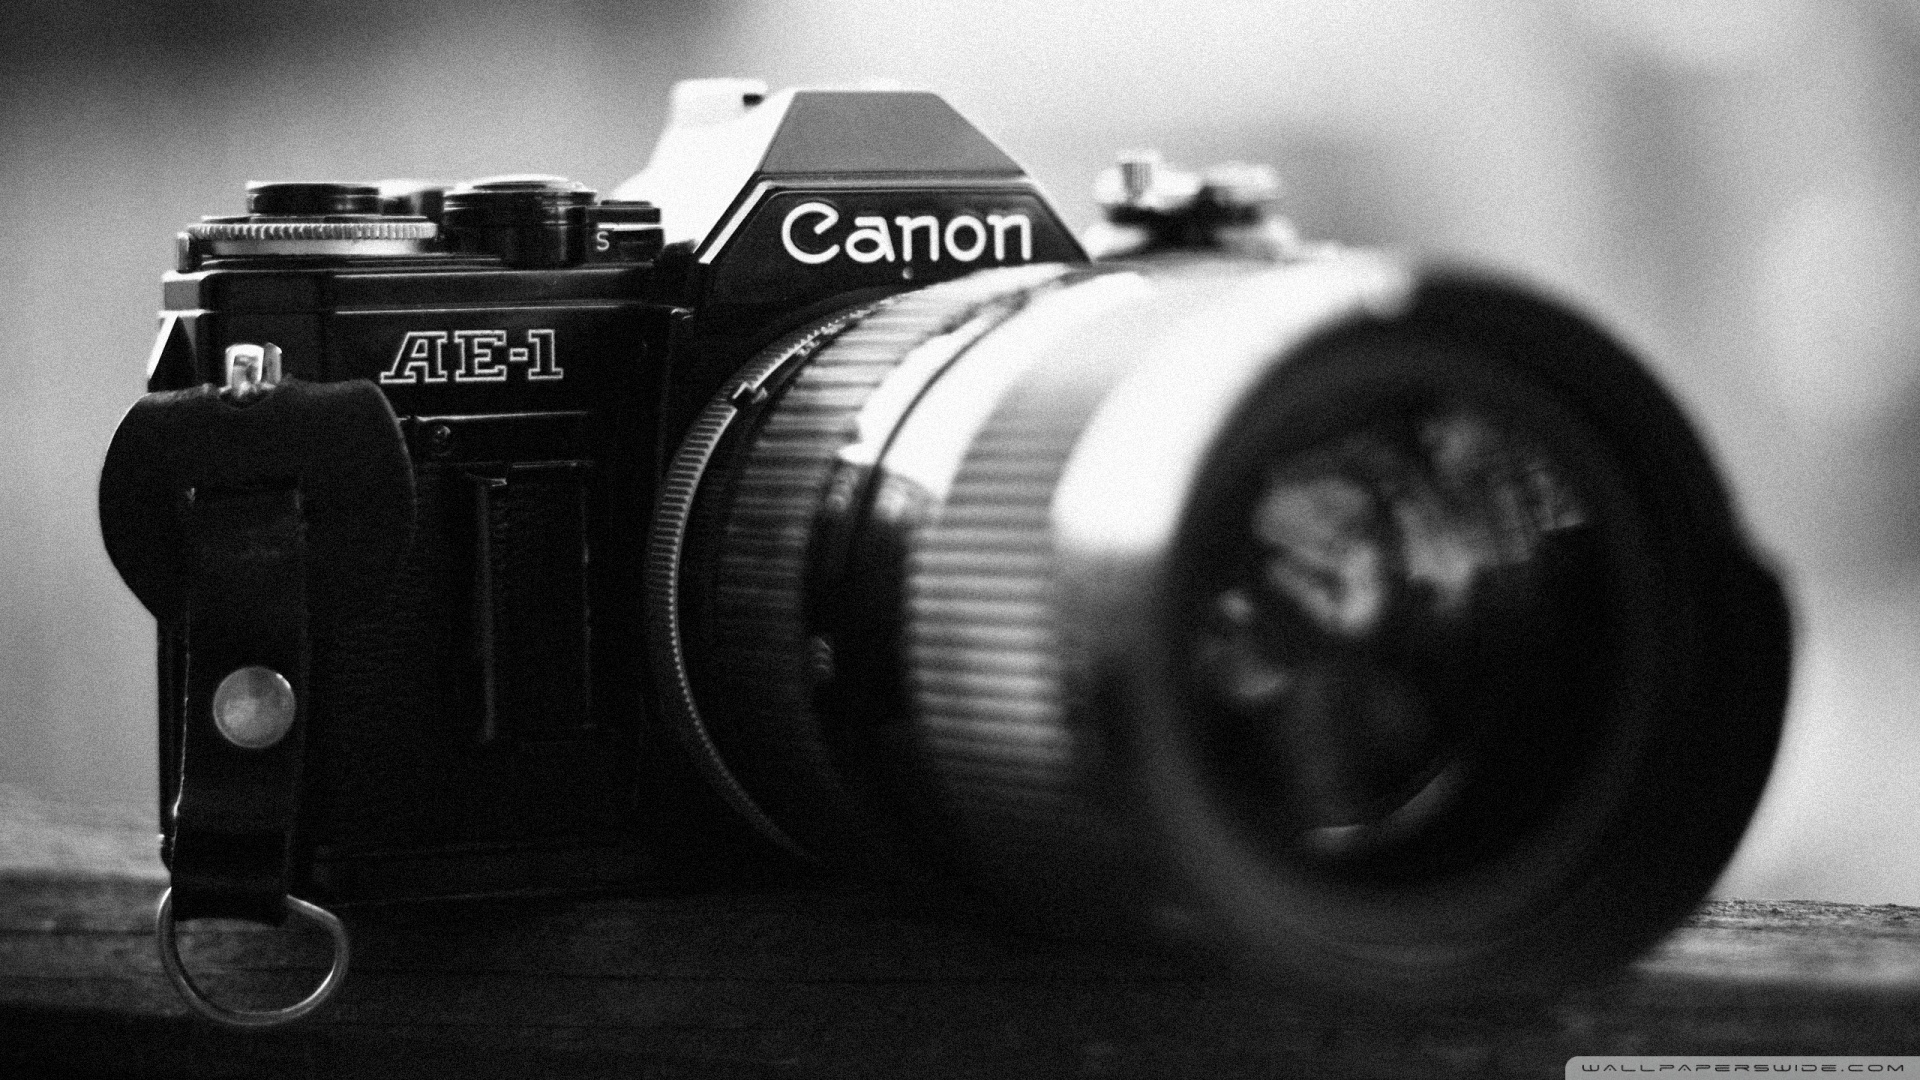 canon dslr kamera wallpaper,kamera,kameraobjektiv,linse,spiegellose wechselobjektivkamera,spiegelreflexkamera